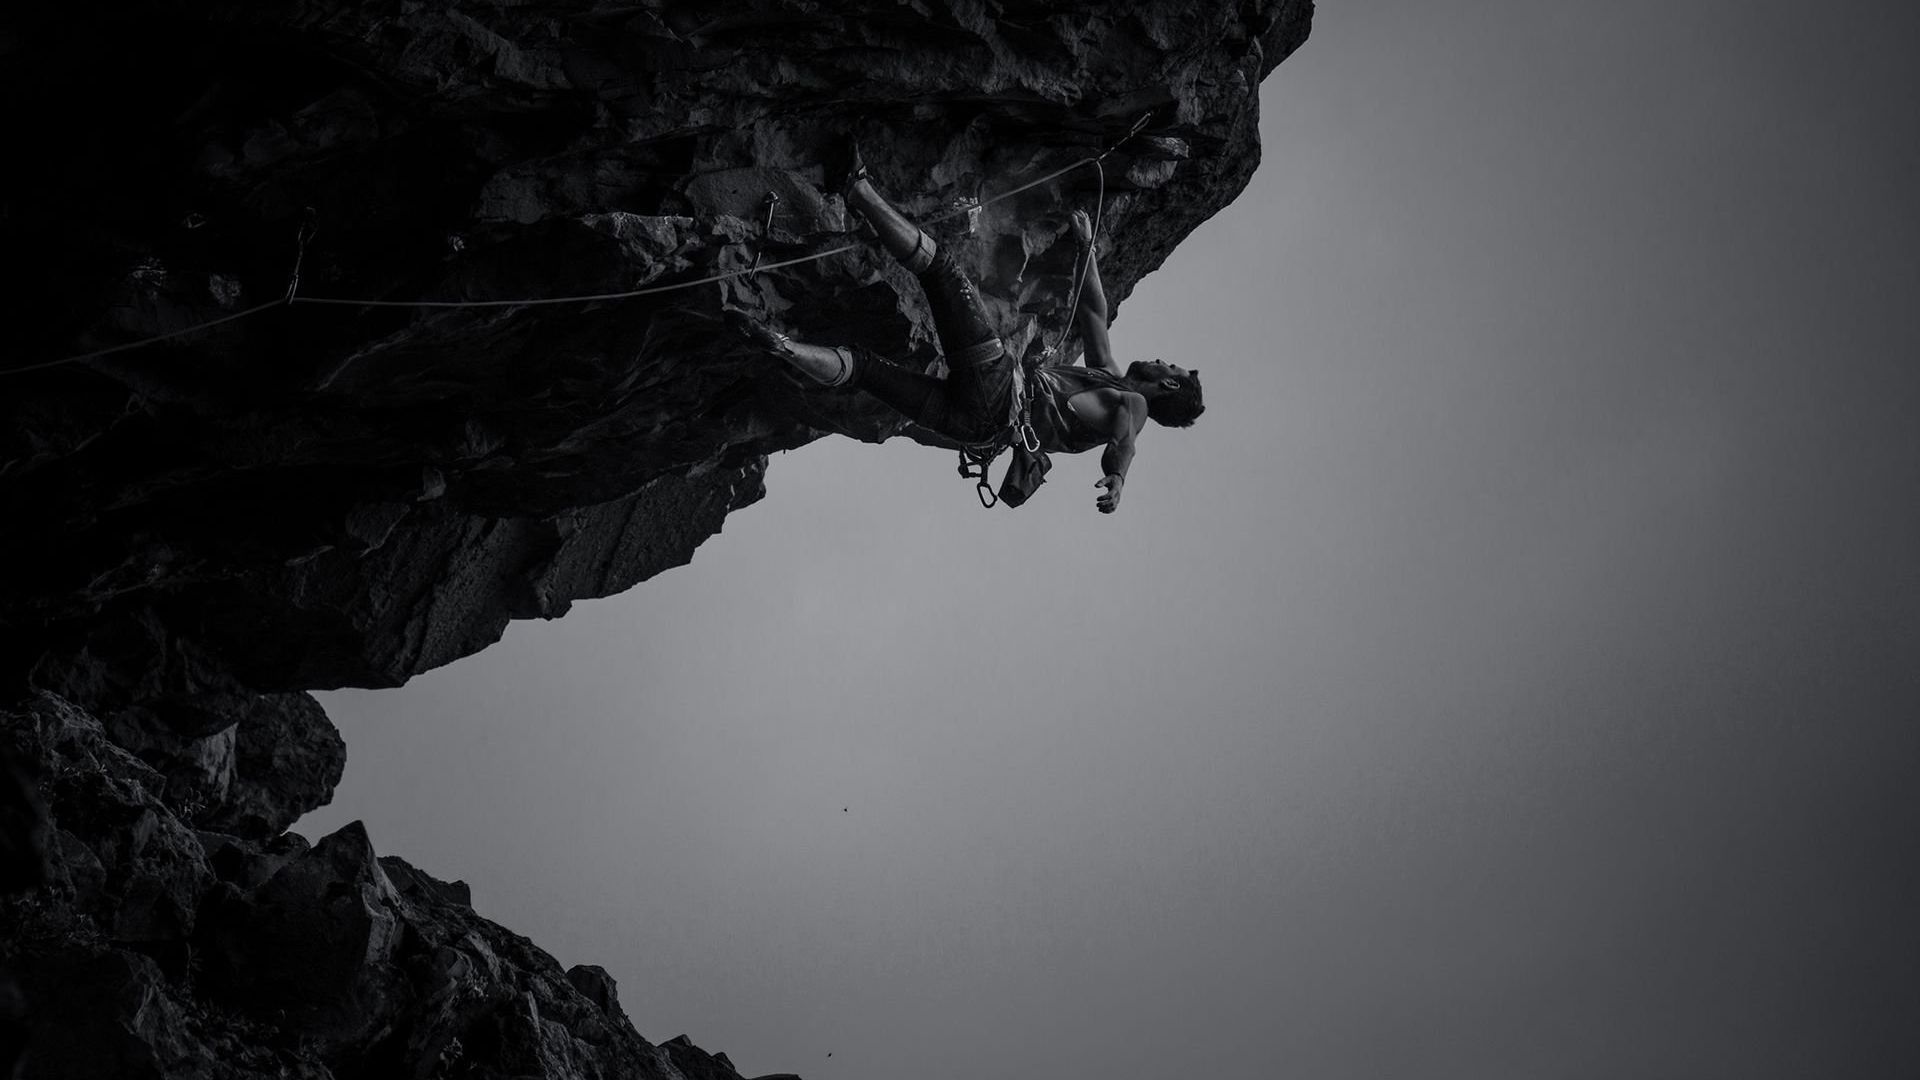 Desktop Wallpaper Monochrome Rock Climbing Of Man Hd Image Picture